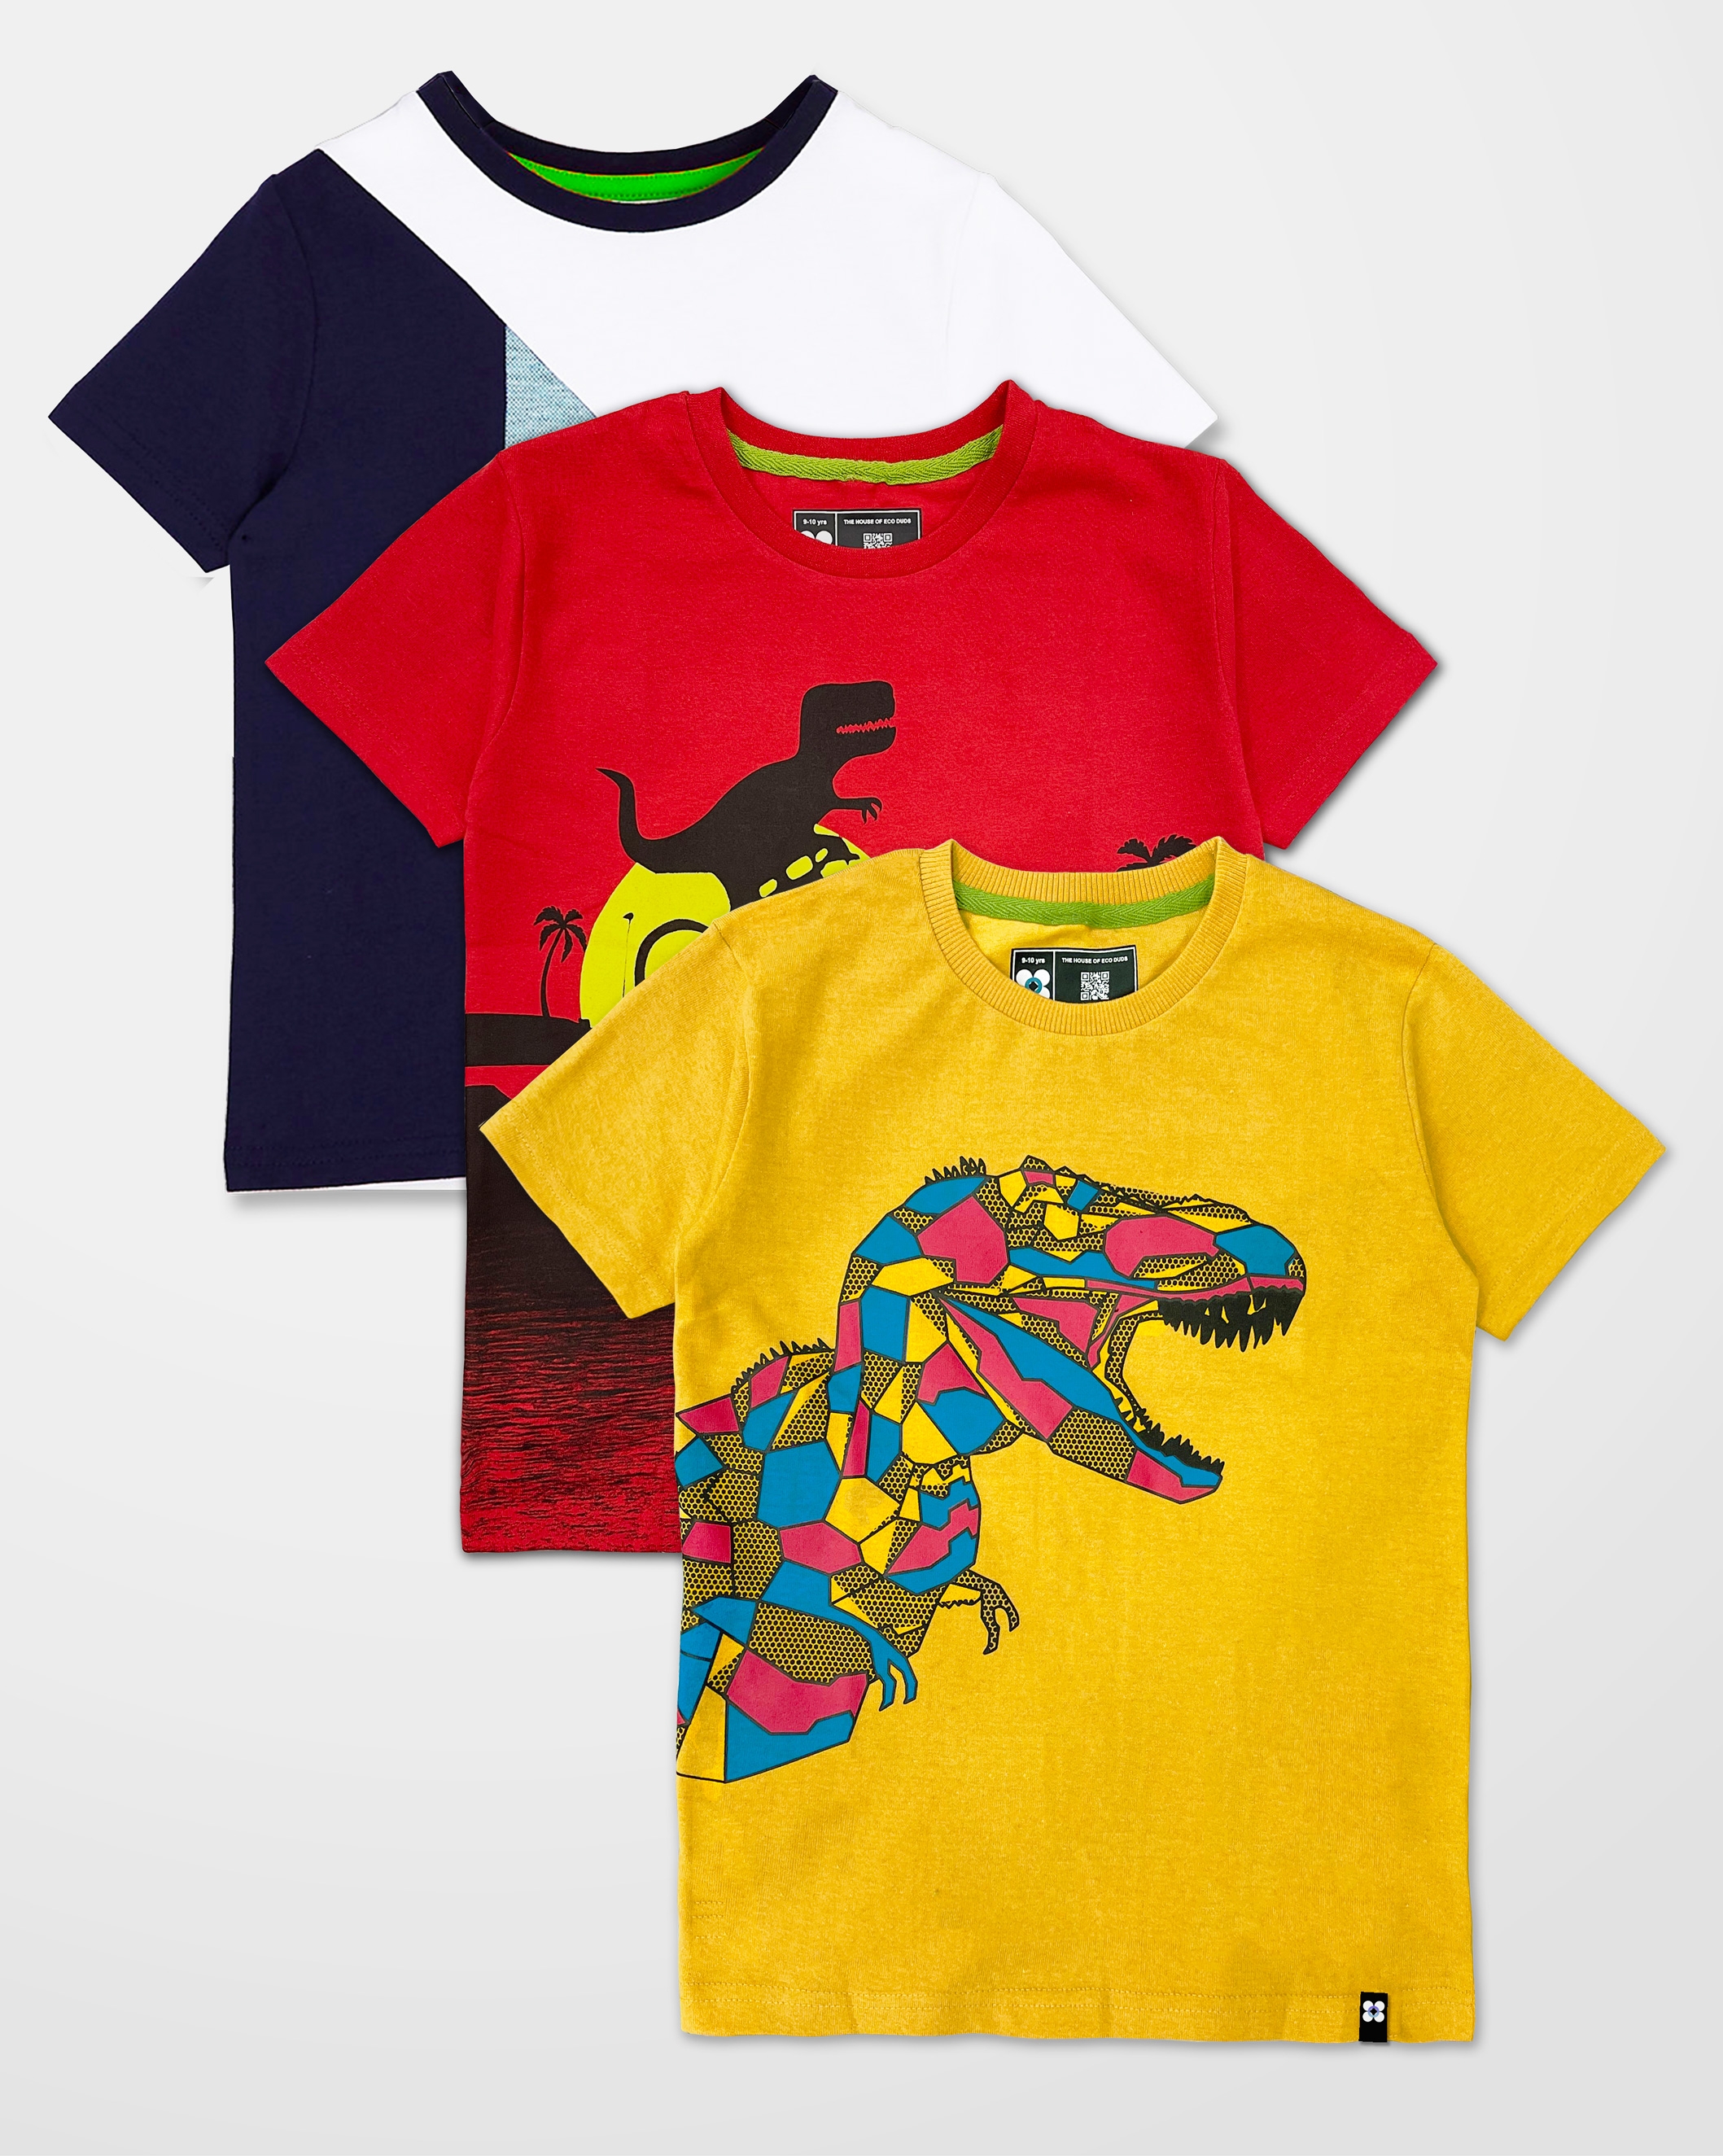 Vertu Duds | Vertu Duds Printed Unisex Kids Round Neck Multicoloured T-Shirt